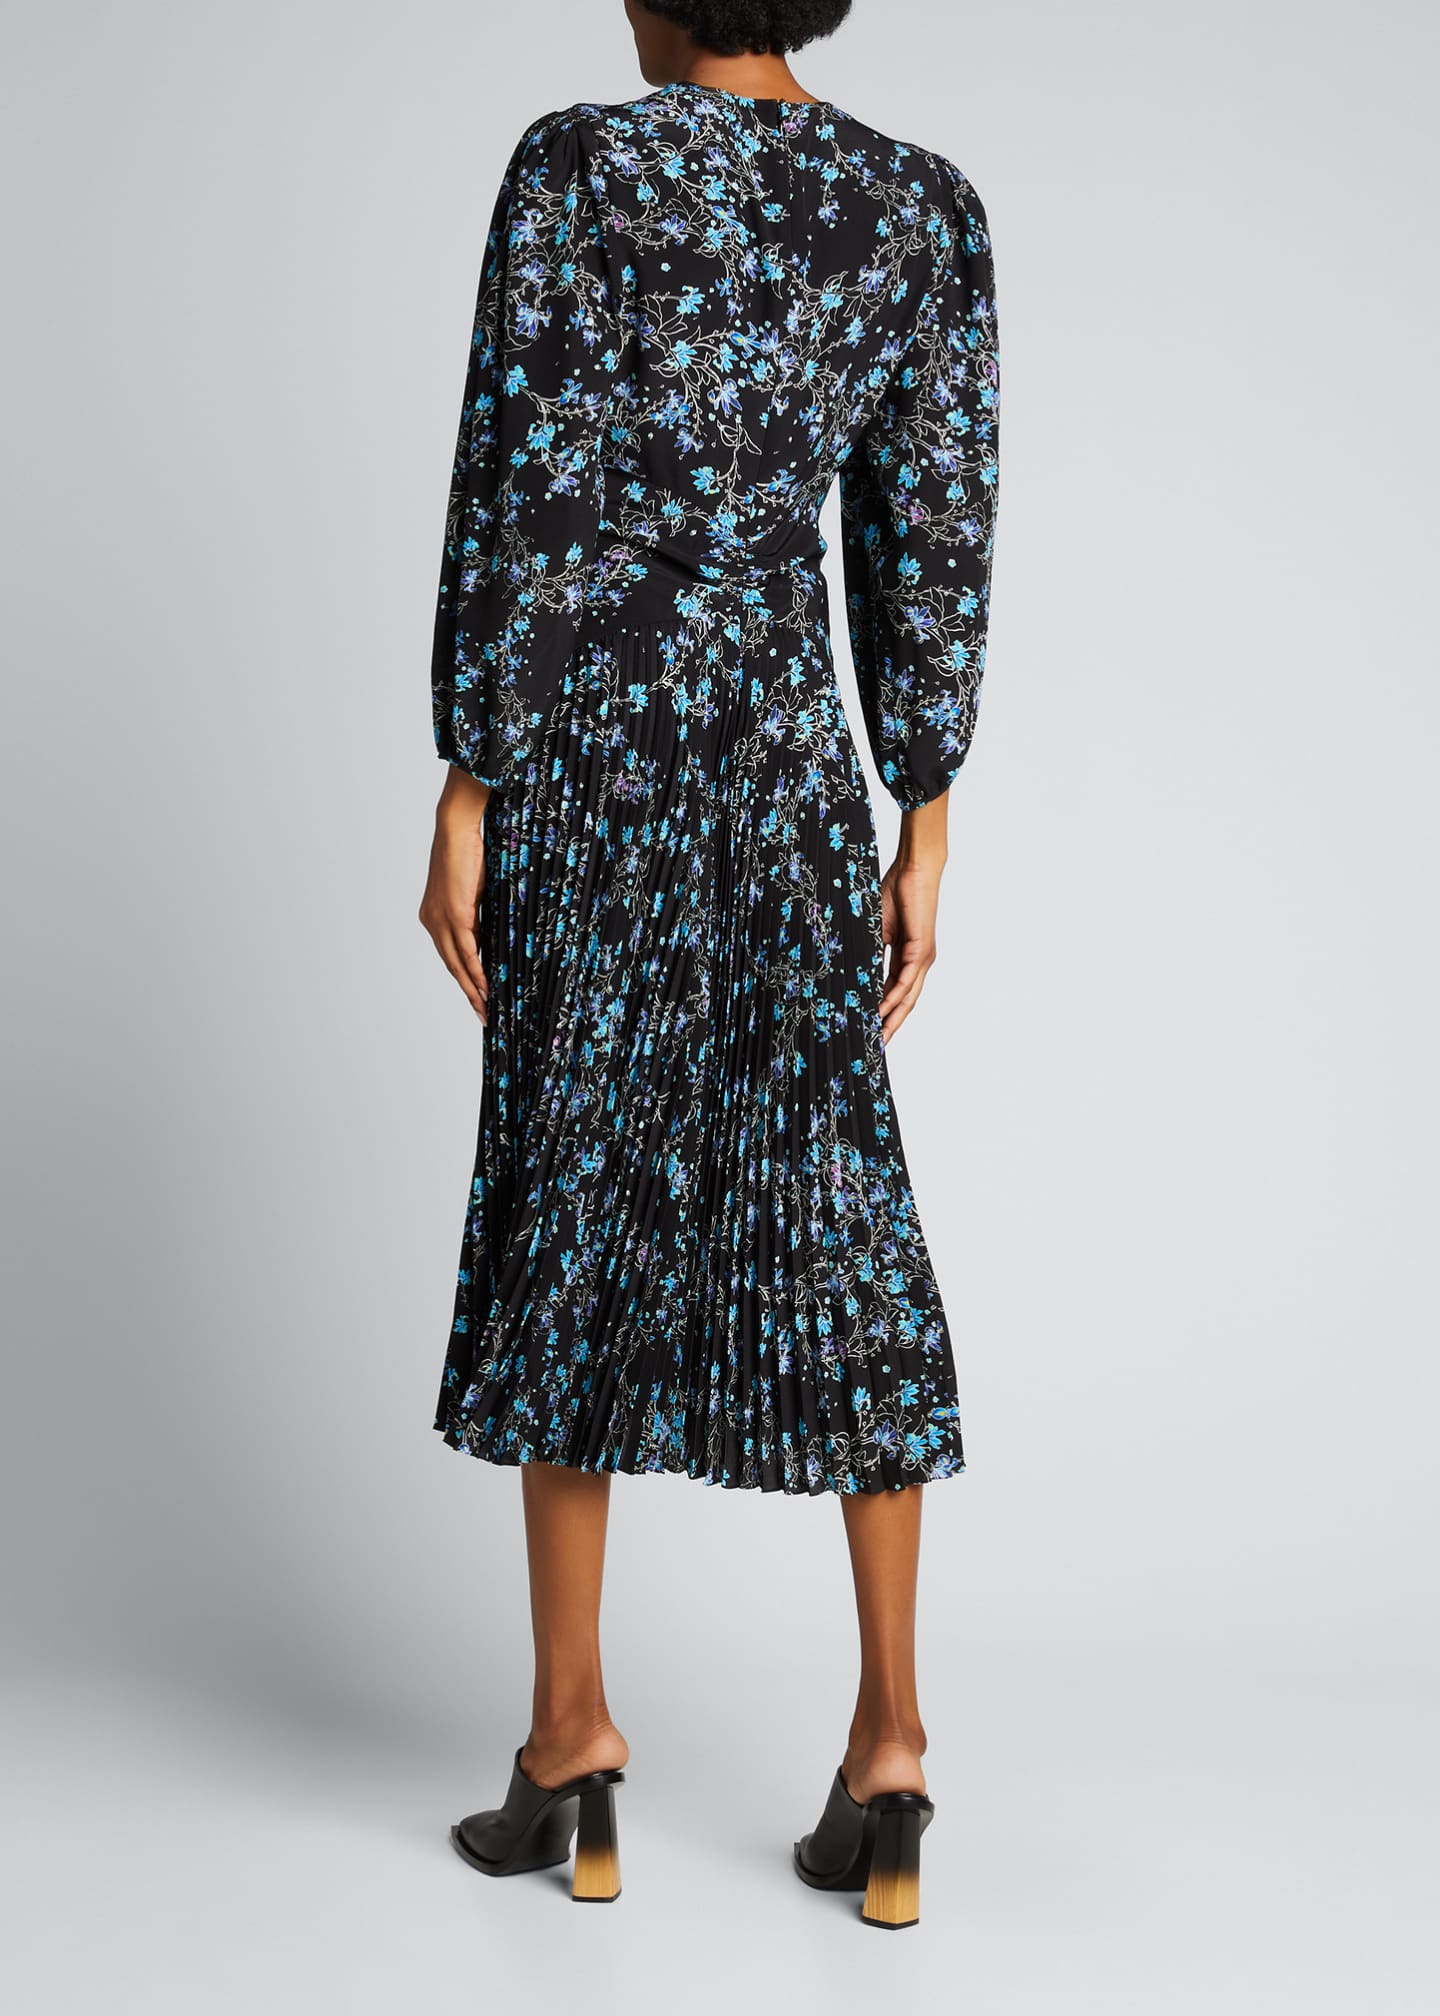 Givenchy Pleated Floral-Print Crepe Midi Dress - Bergdorf Goodman